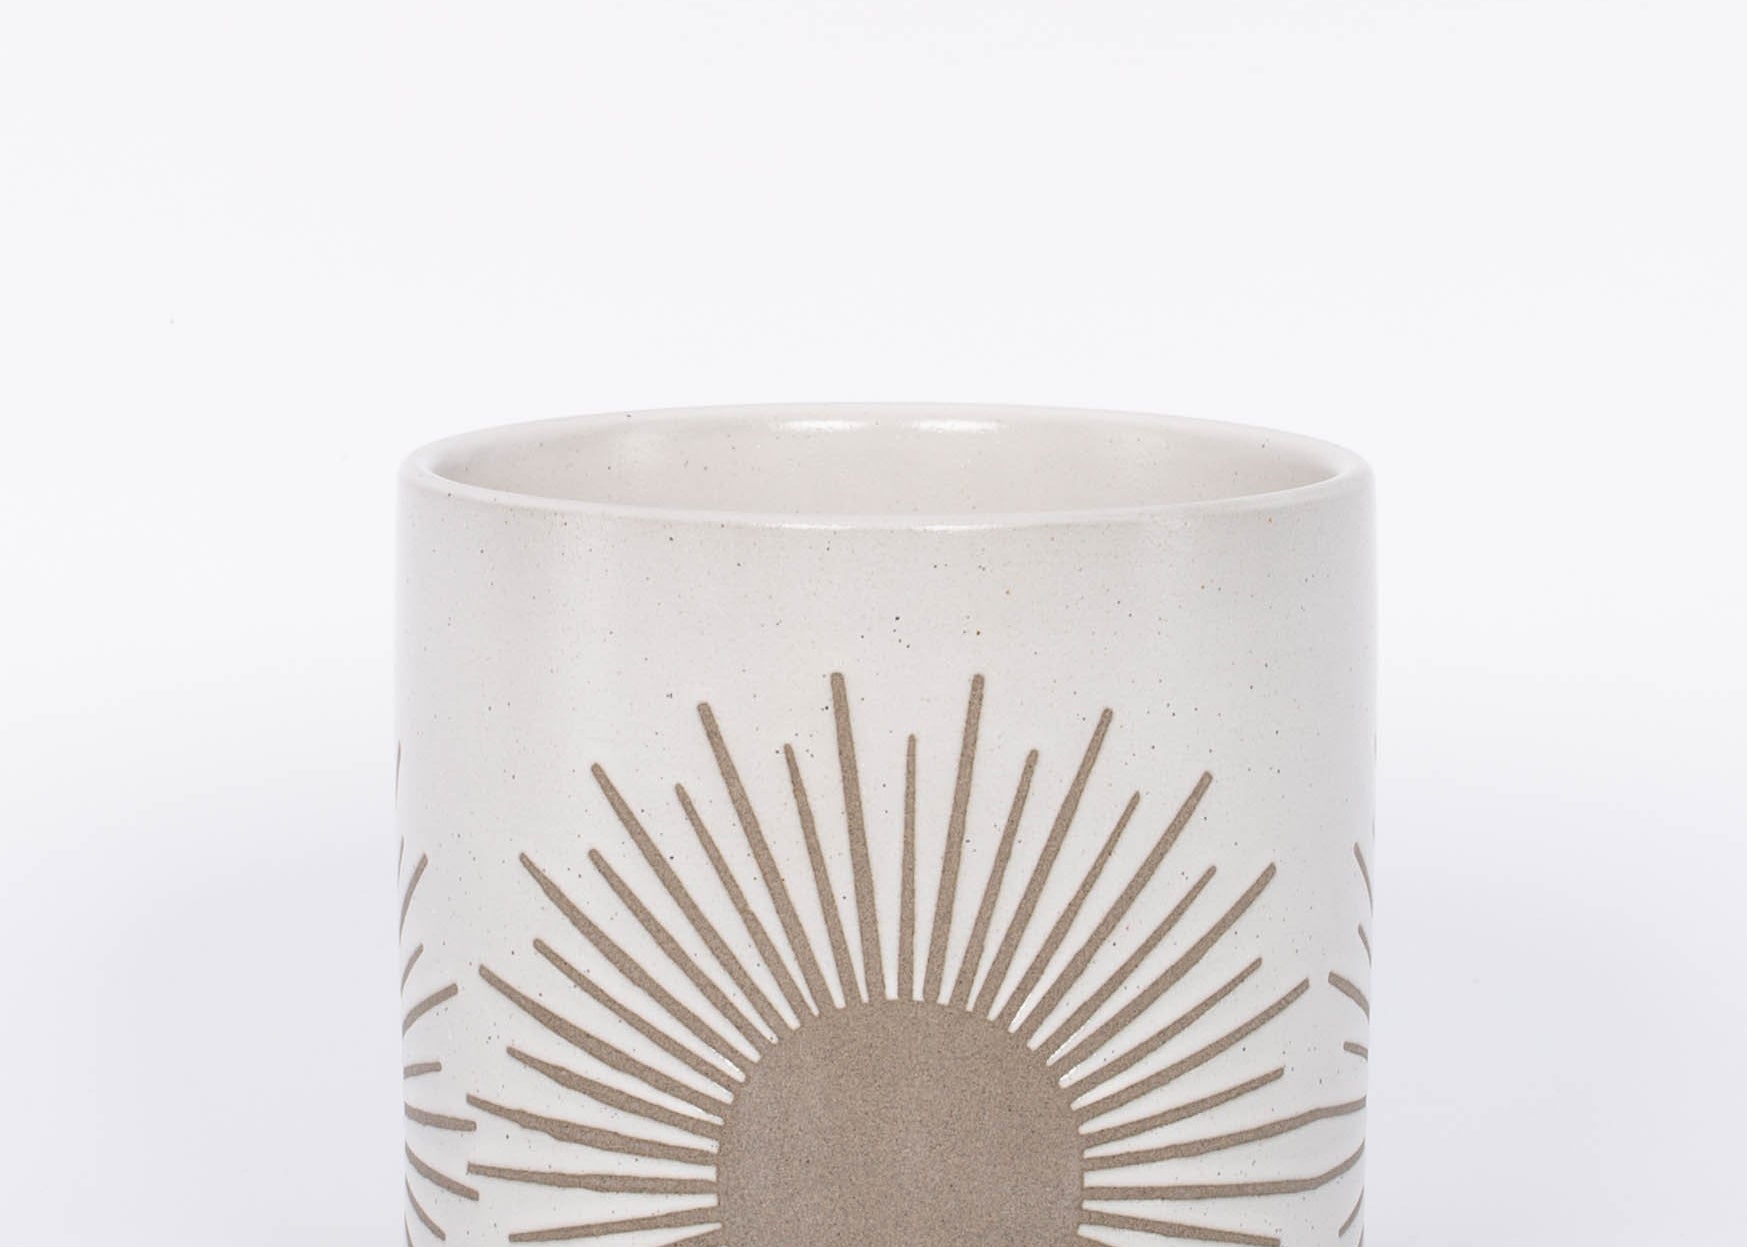 Medium Sunrise to Sunset planter Pot by Citrine with golden sun design on natural white. 